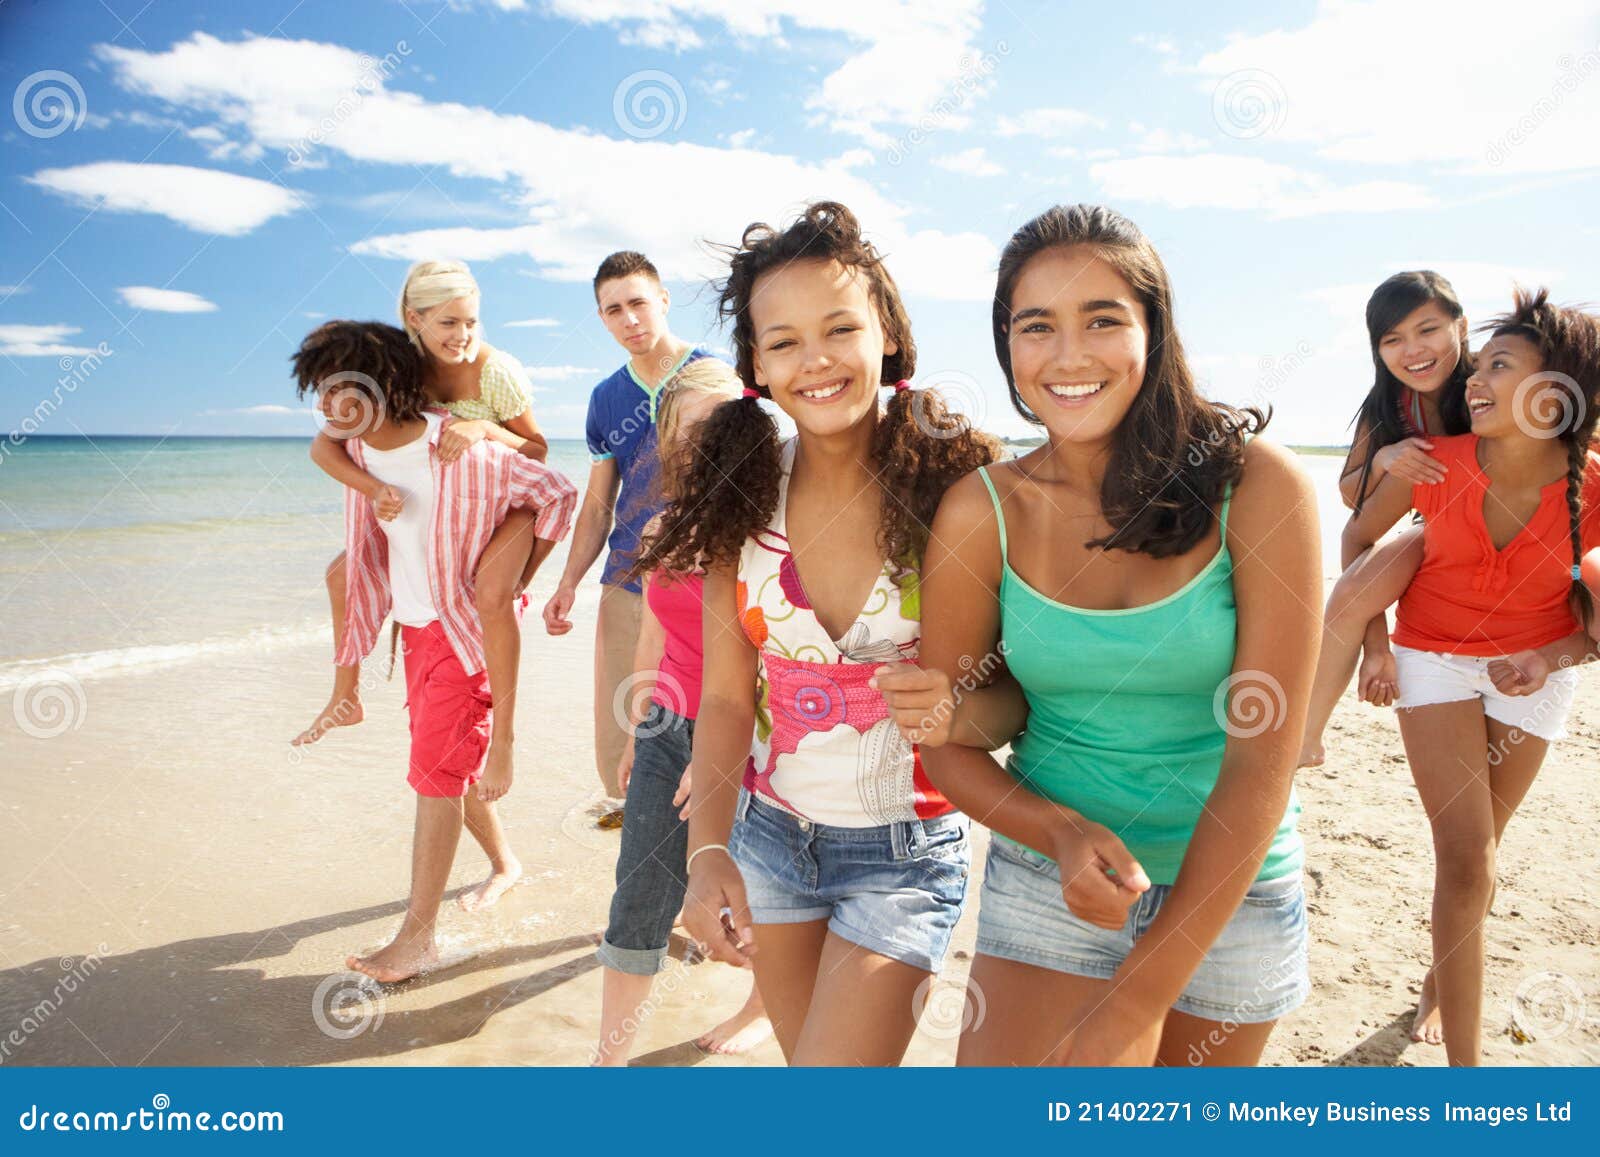 group of teenagers walking along beach